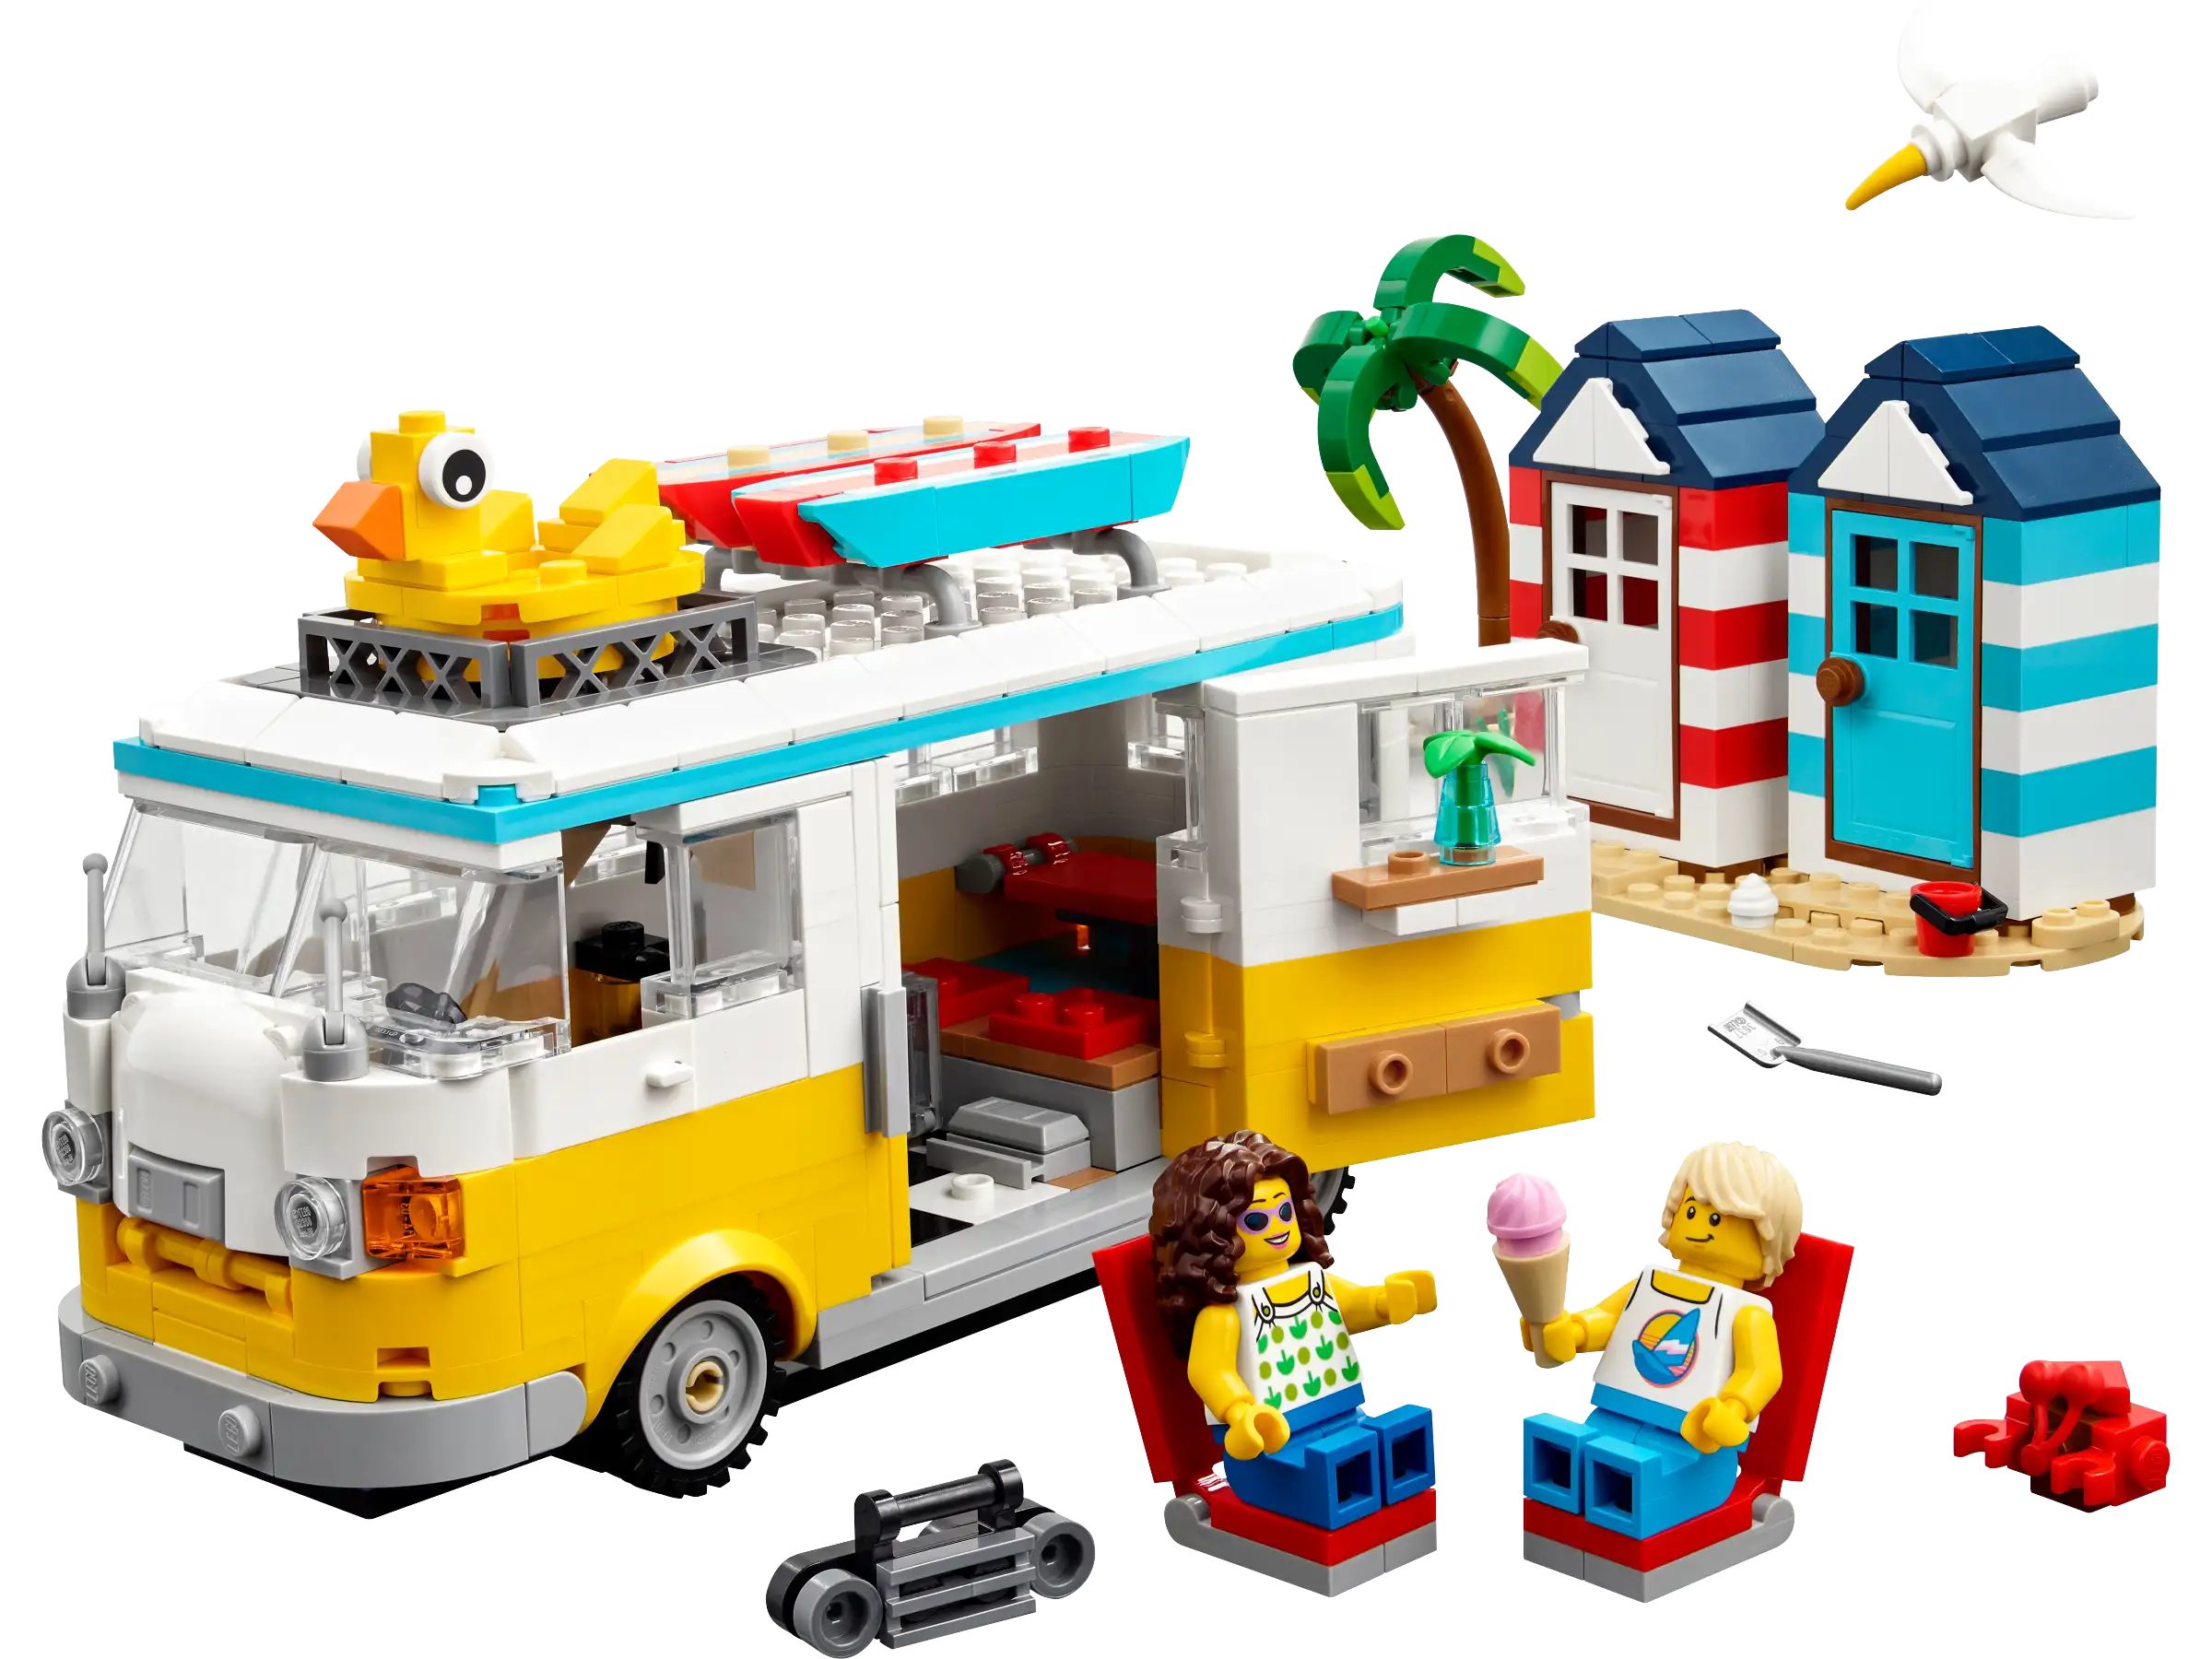 Lego - The beach camping van